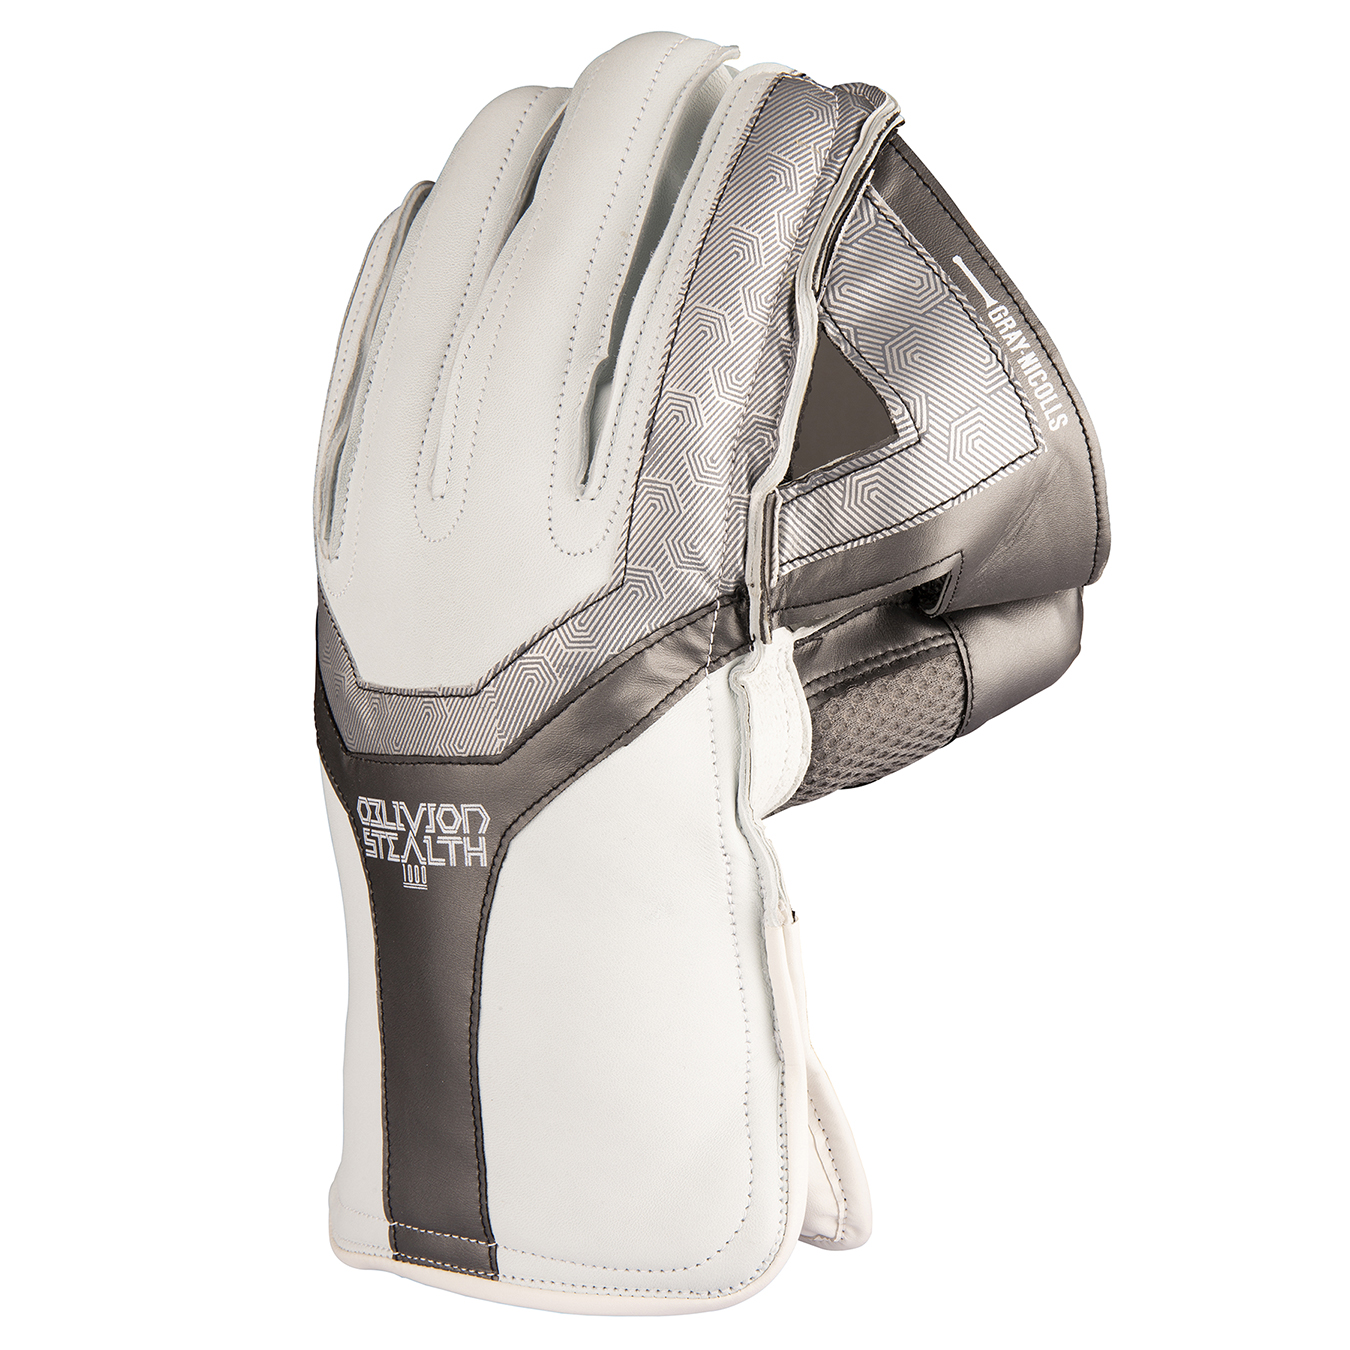 Gray Nicolls Predator 3 Limited Edition Cricket Sports Wicket Keeping Gloves 